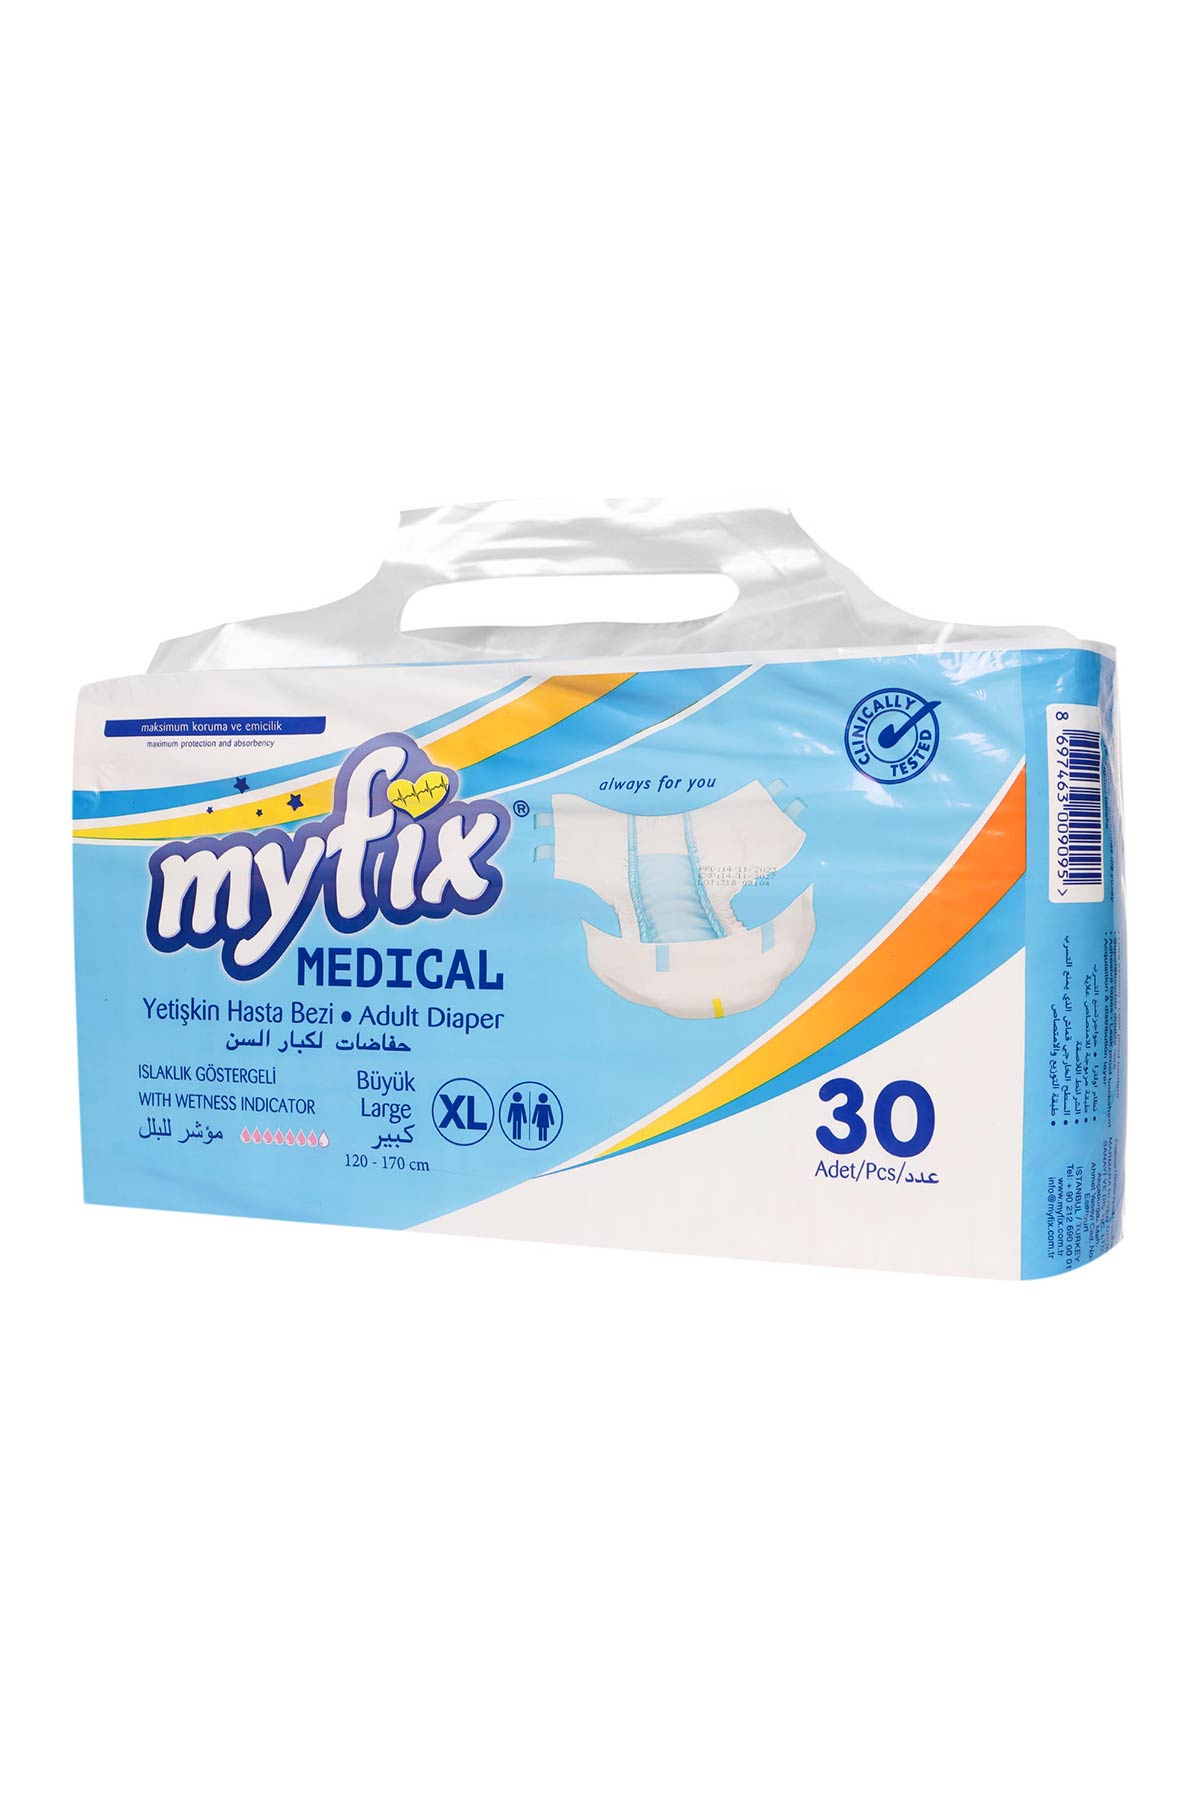 MyFix Yetişkin Hasta Bezi X Large